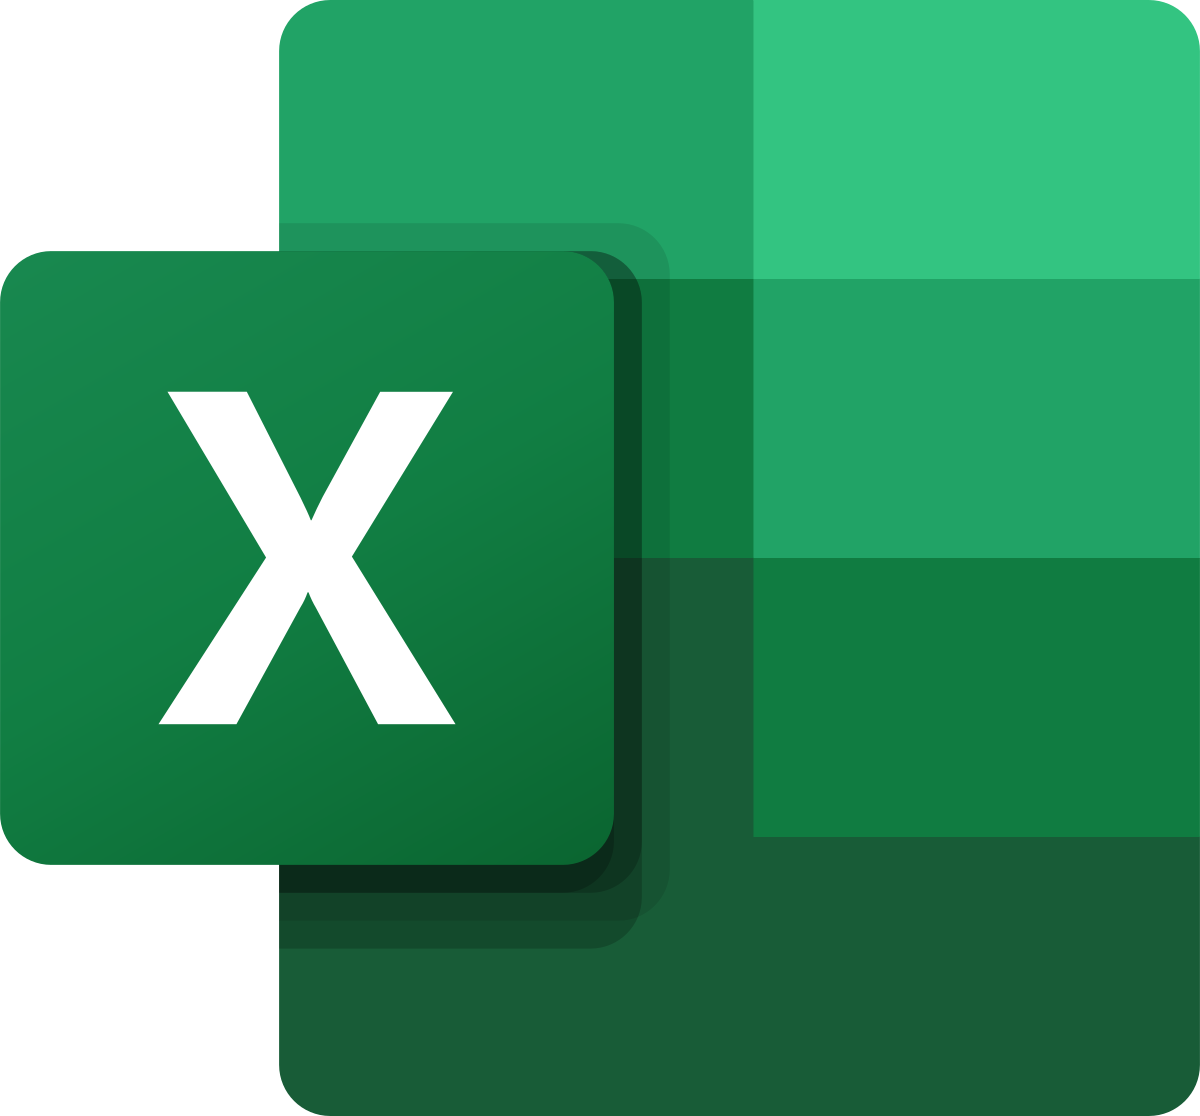 Microsoft Excel startup folder and workbooks